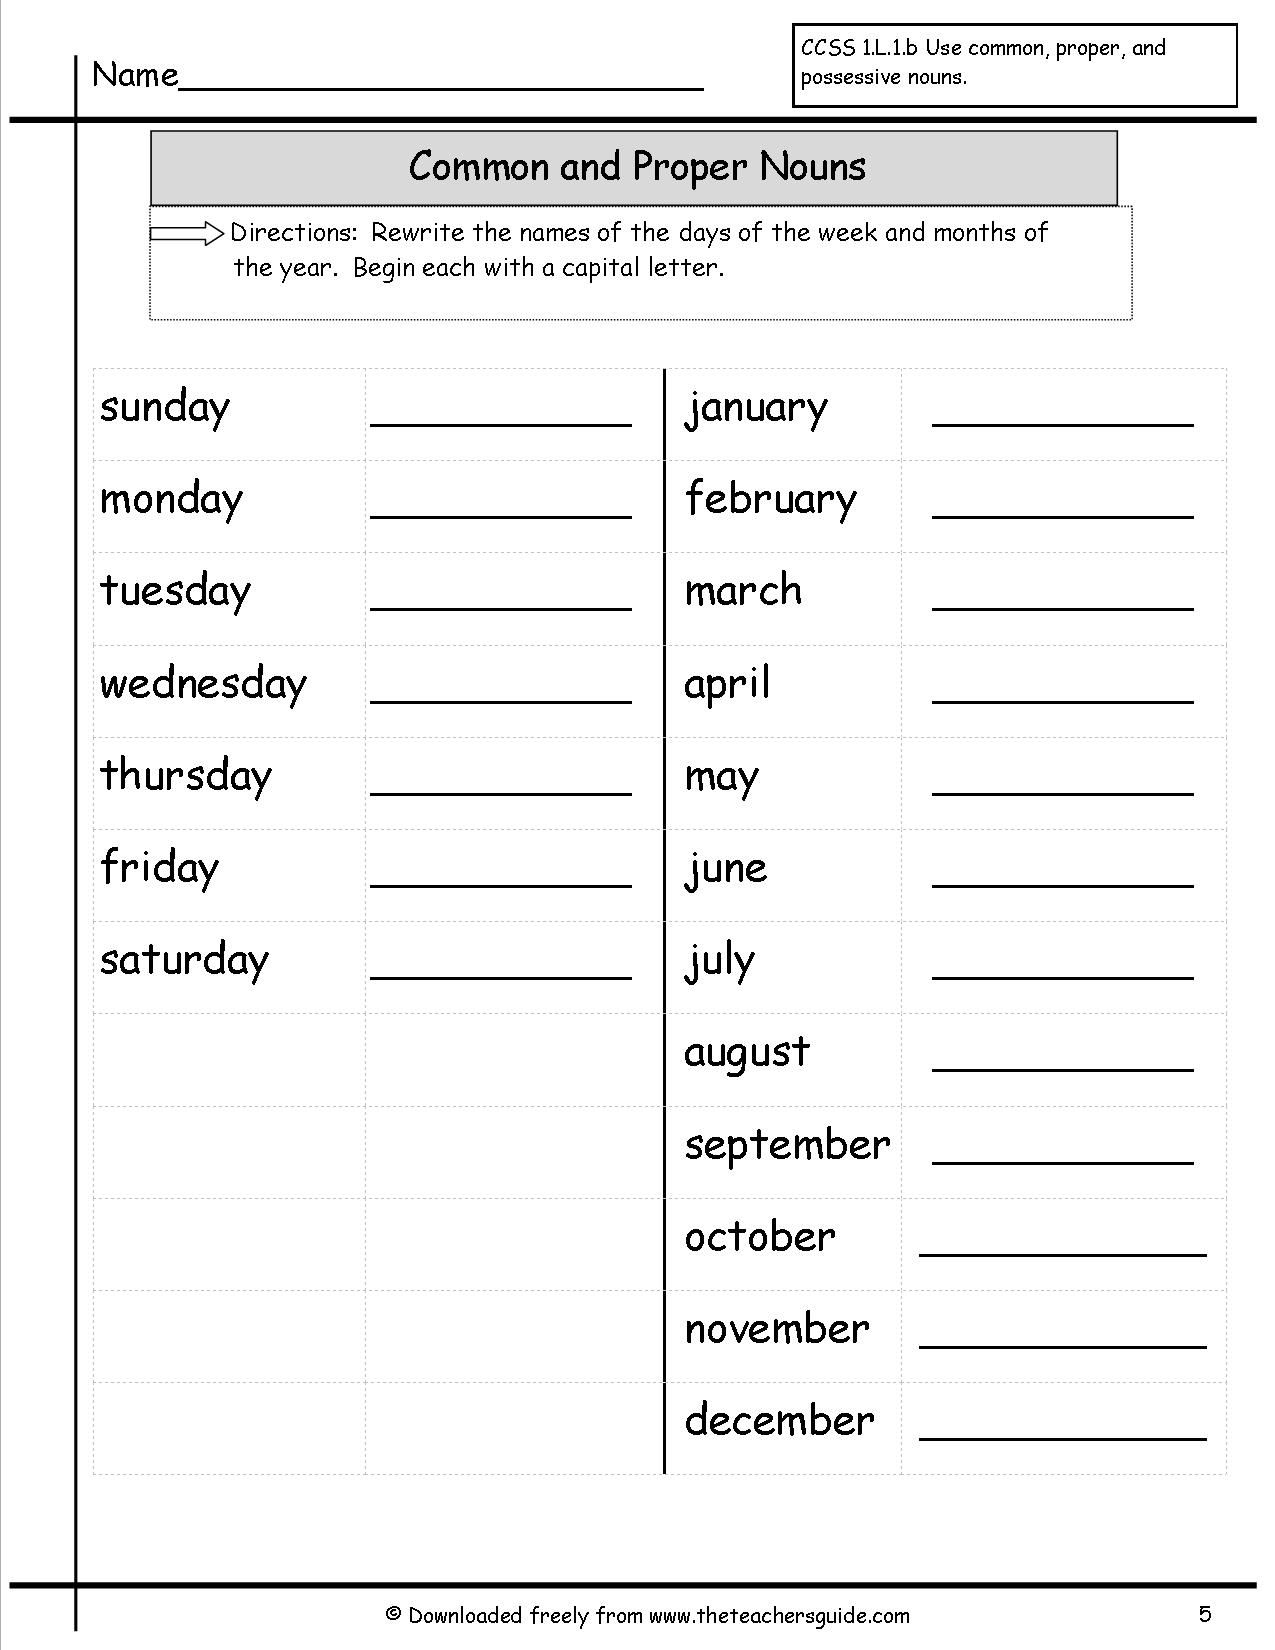 2nd-grade-common-and-proper-nouns-worksheet-commonworksheets